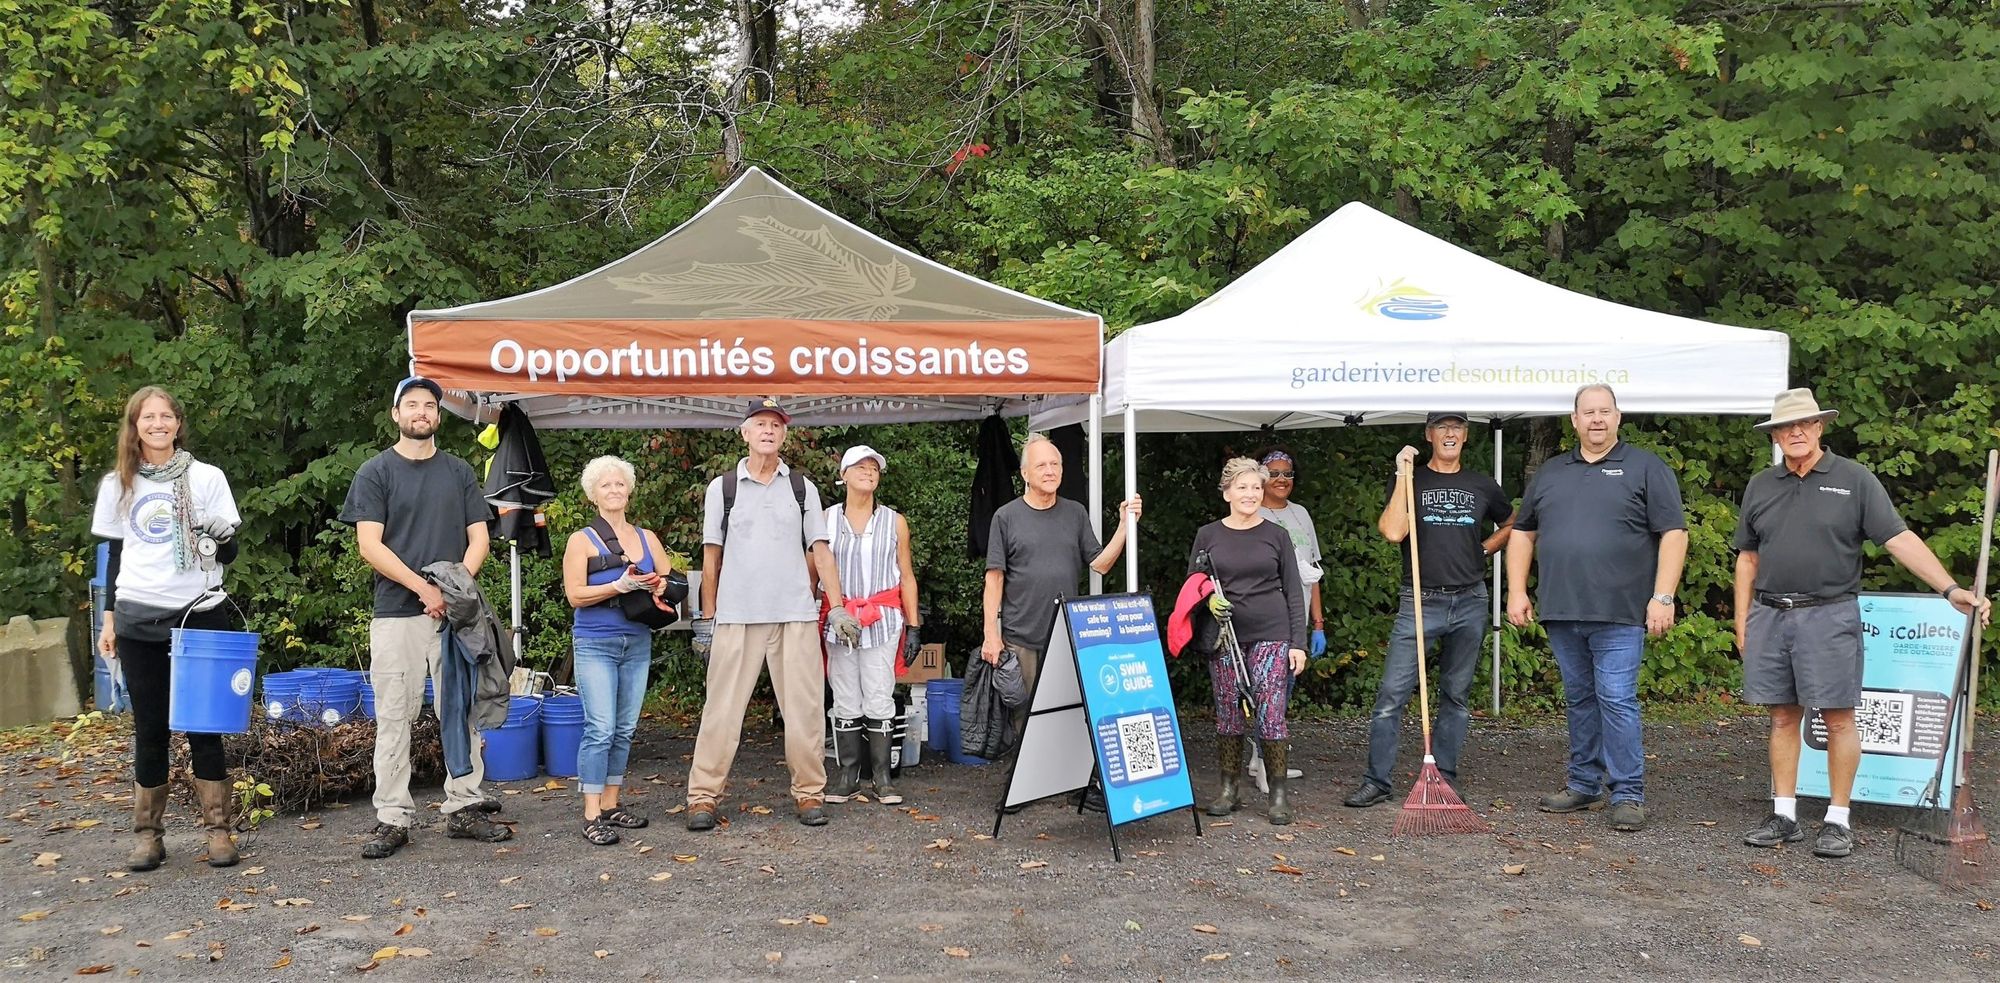 Volunteers work to clean up Ottawa River shoreline